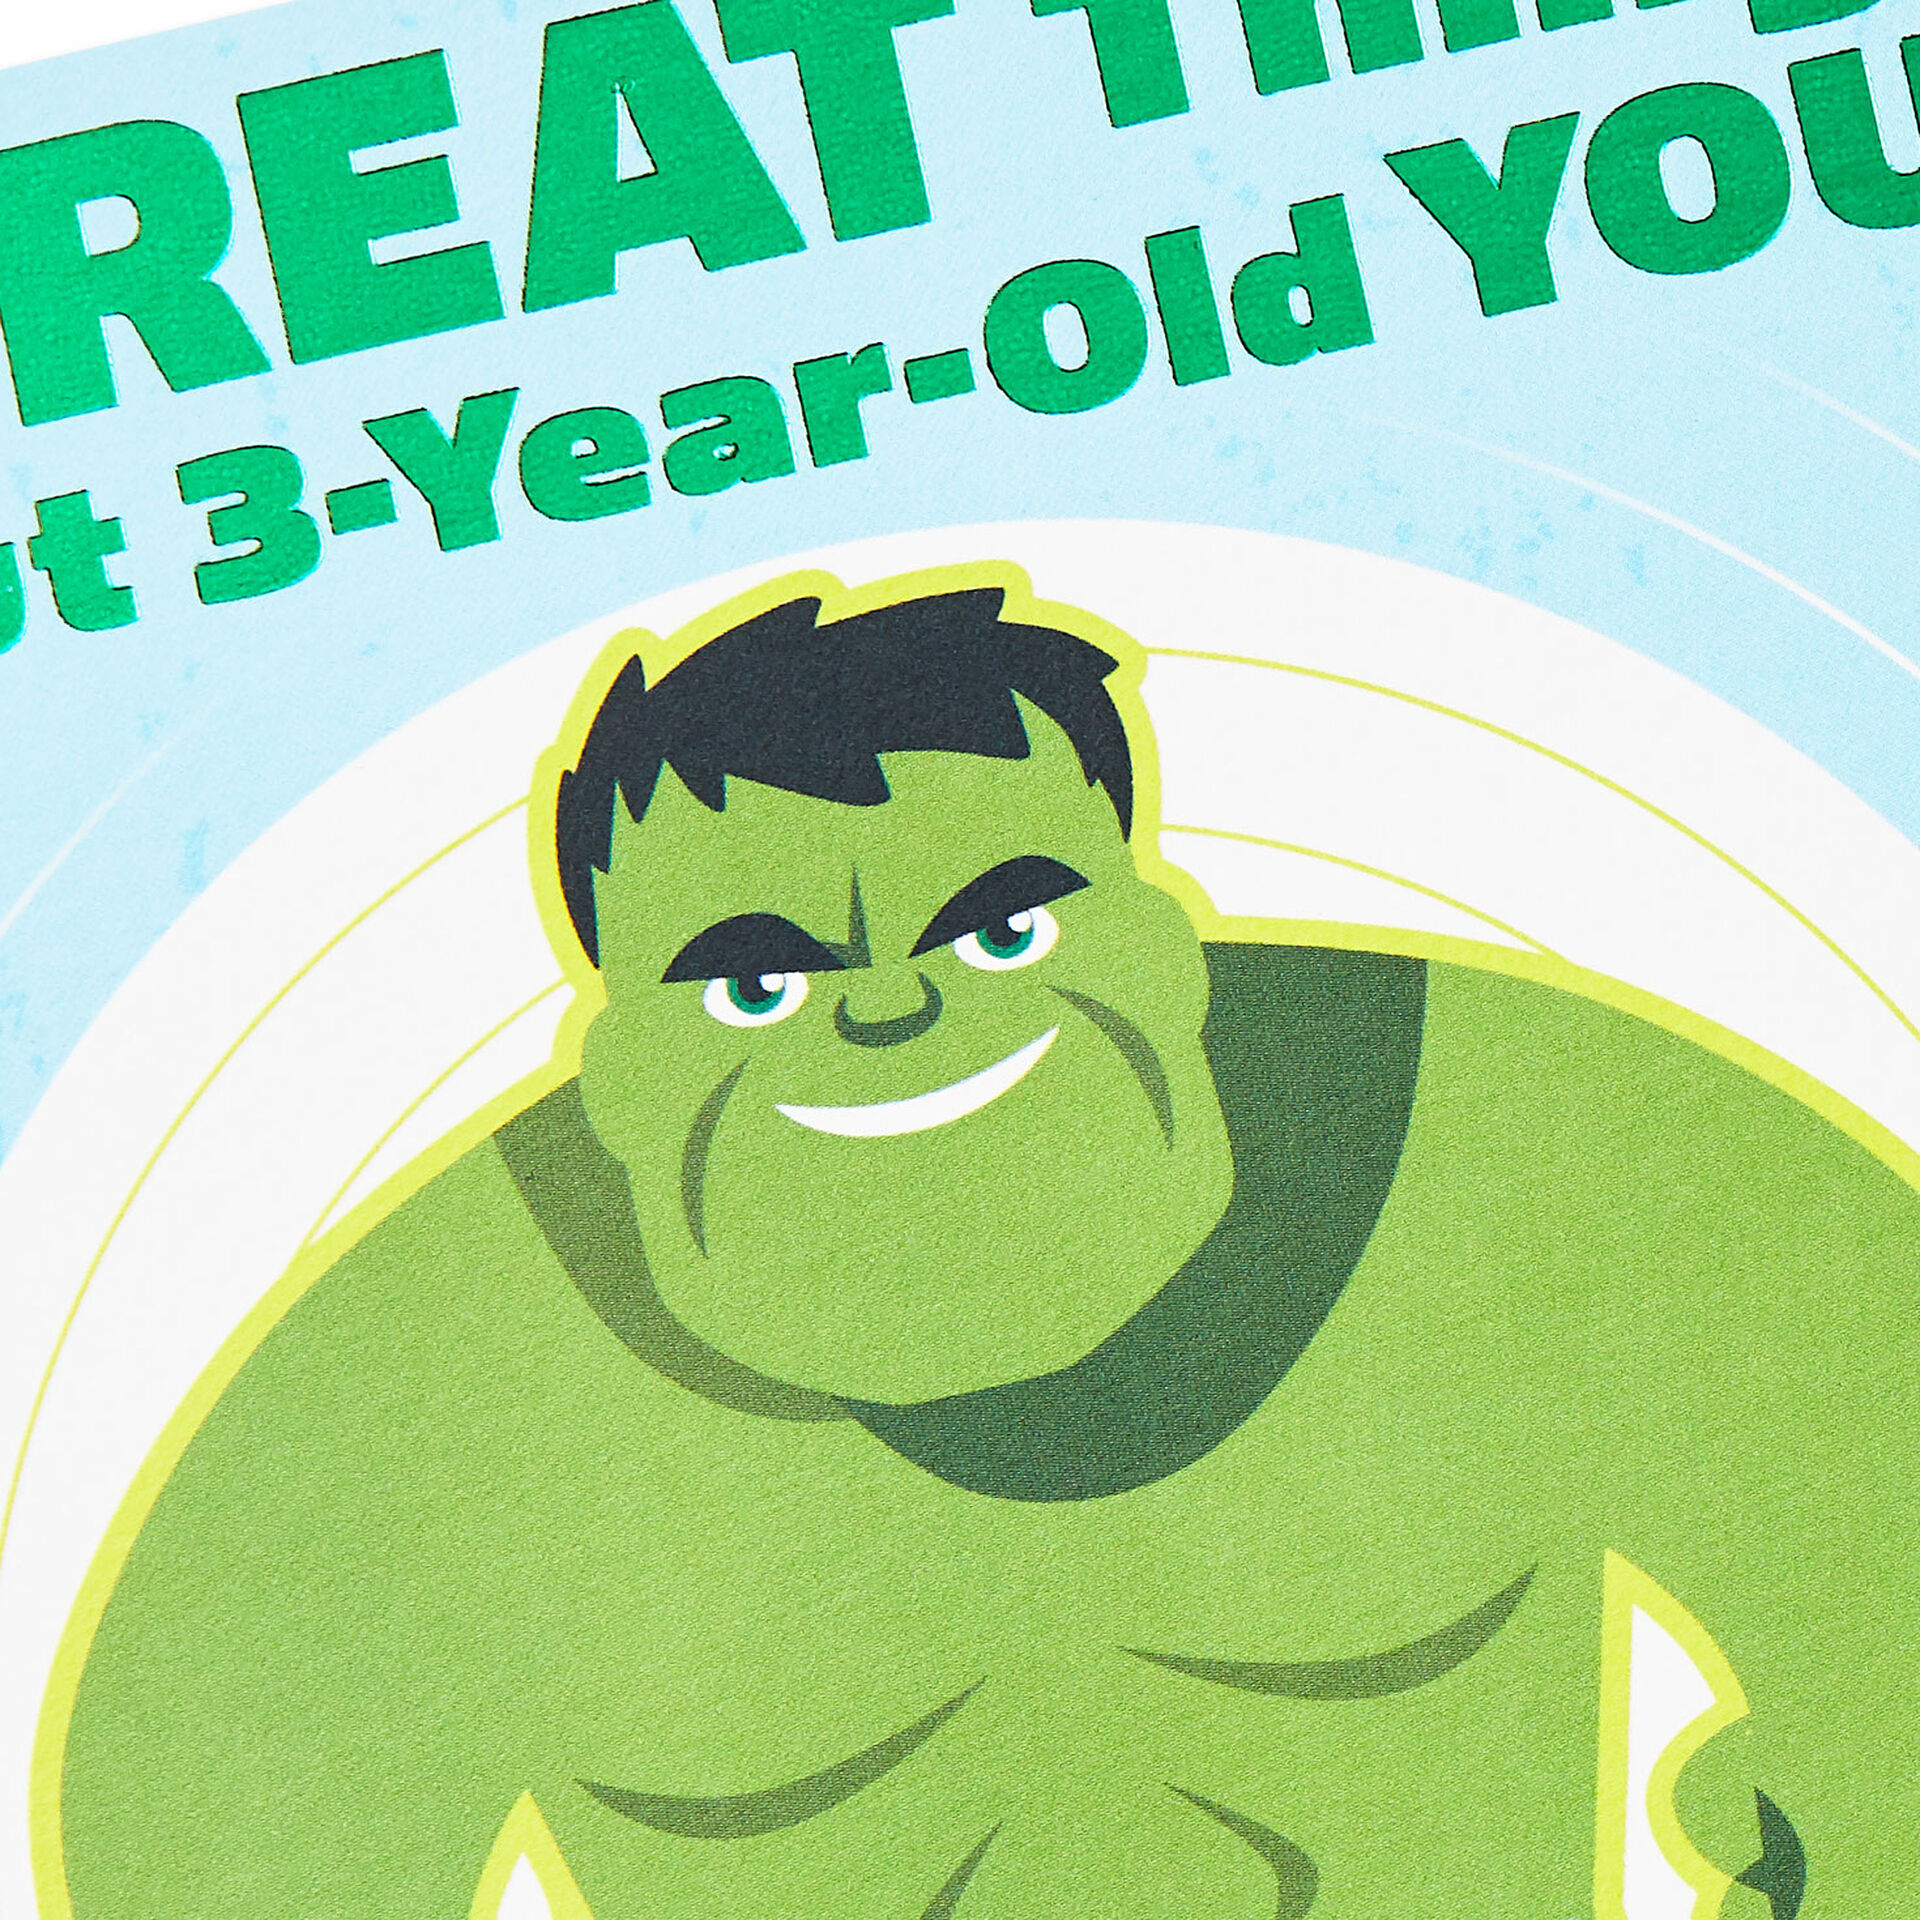 Marvel Avengers Hulk Pop-Up 3rd Birthday Card - Greeting Cards - Hallmark